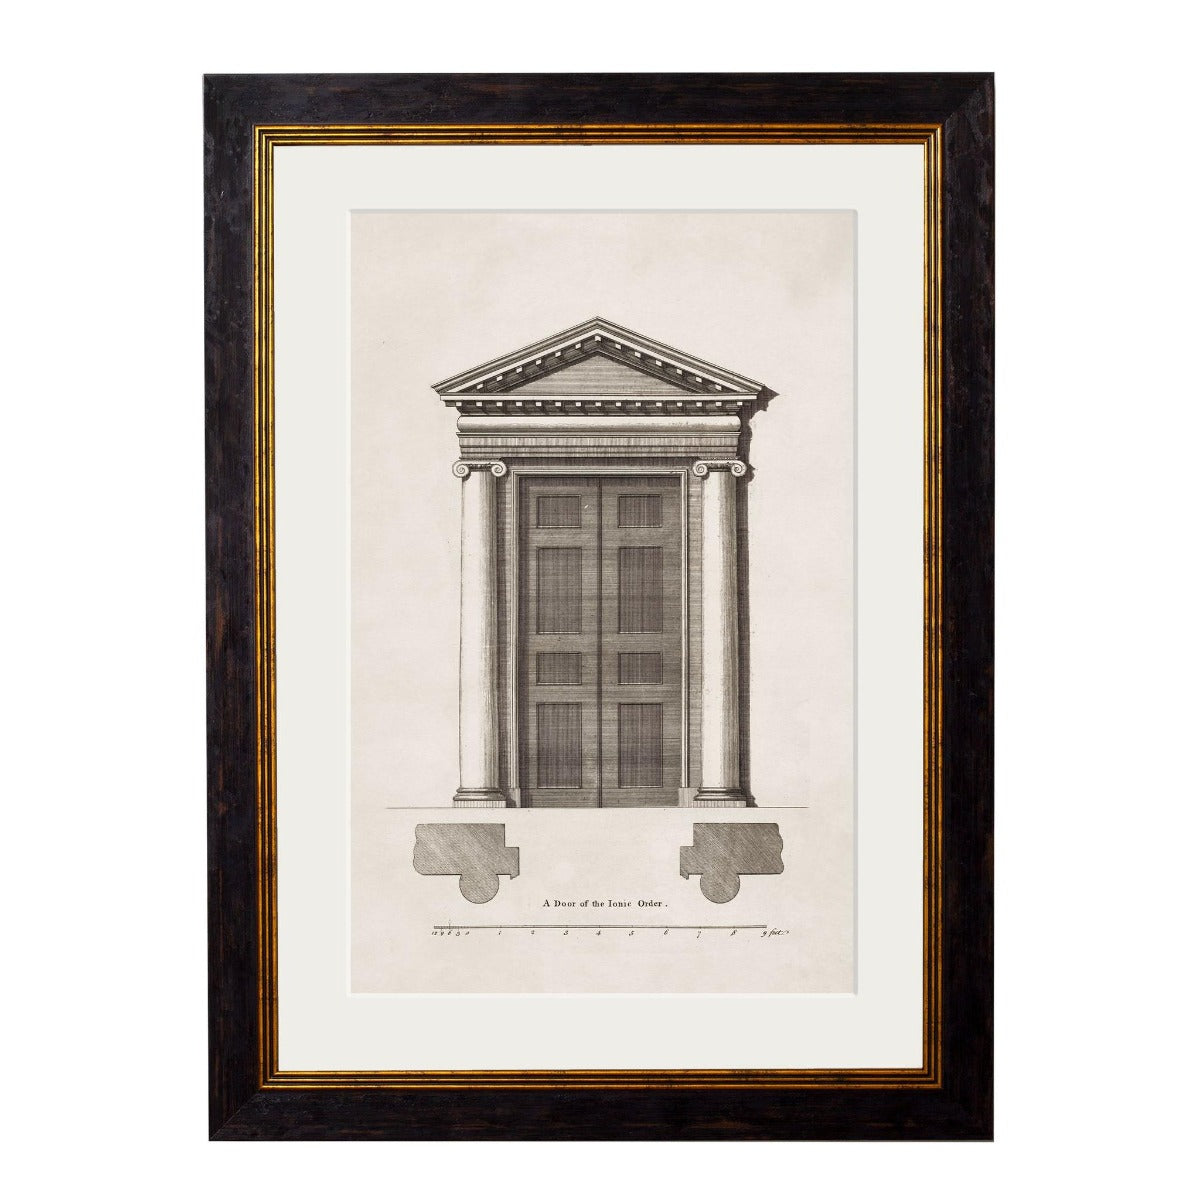 C.1756 Architectural Studies of Doors Framed Prints